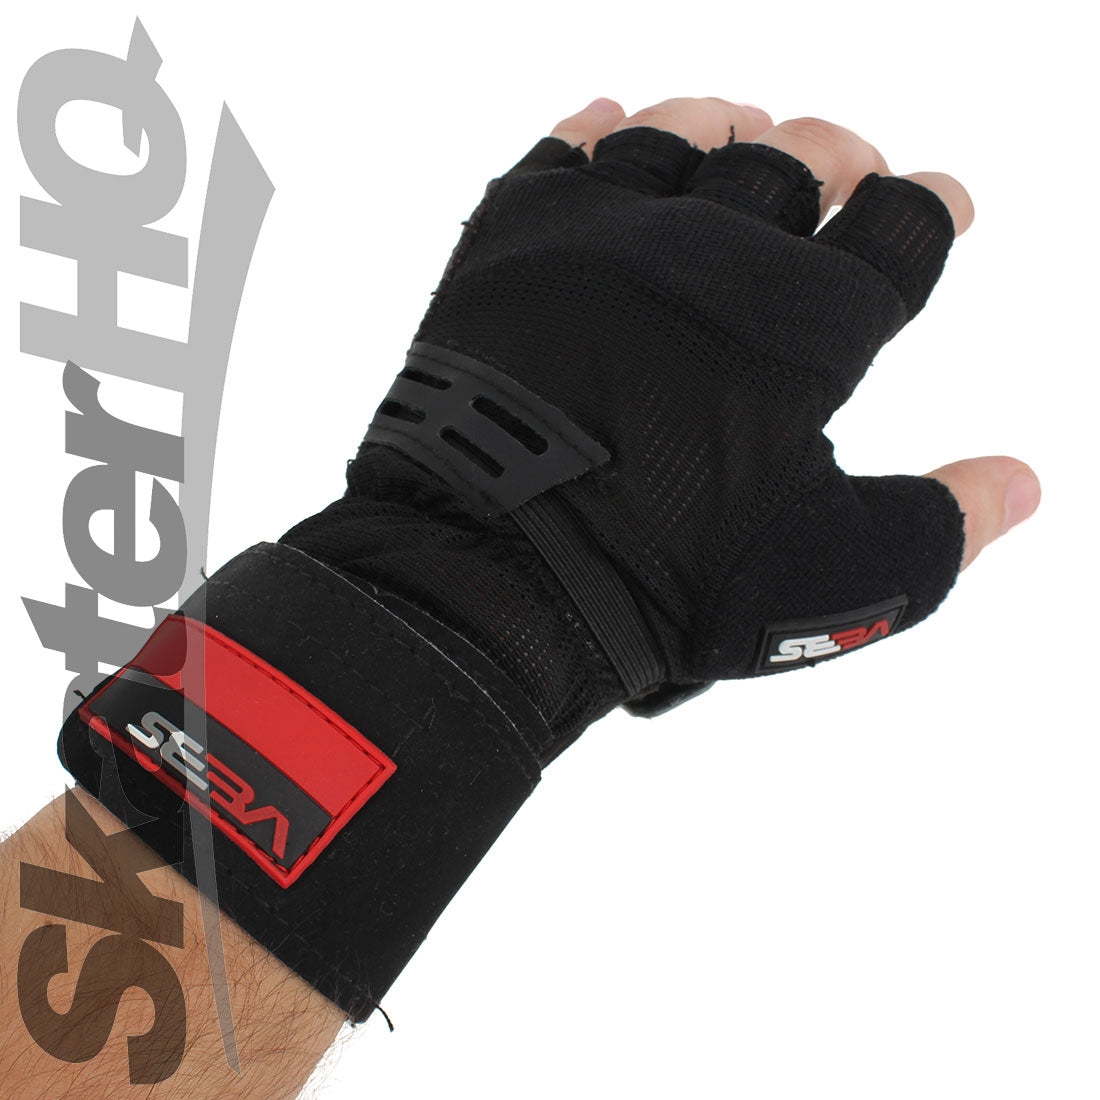 Seba Wrist Guard Gloves Medium Protective Gear